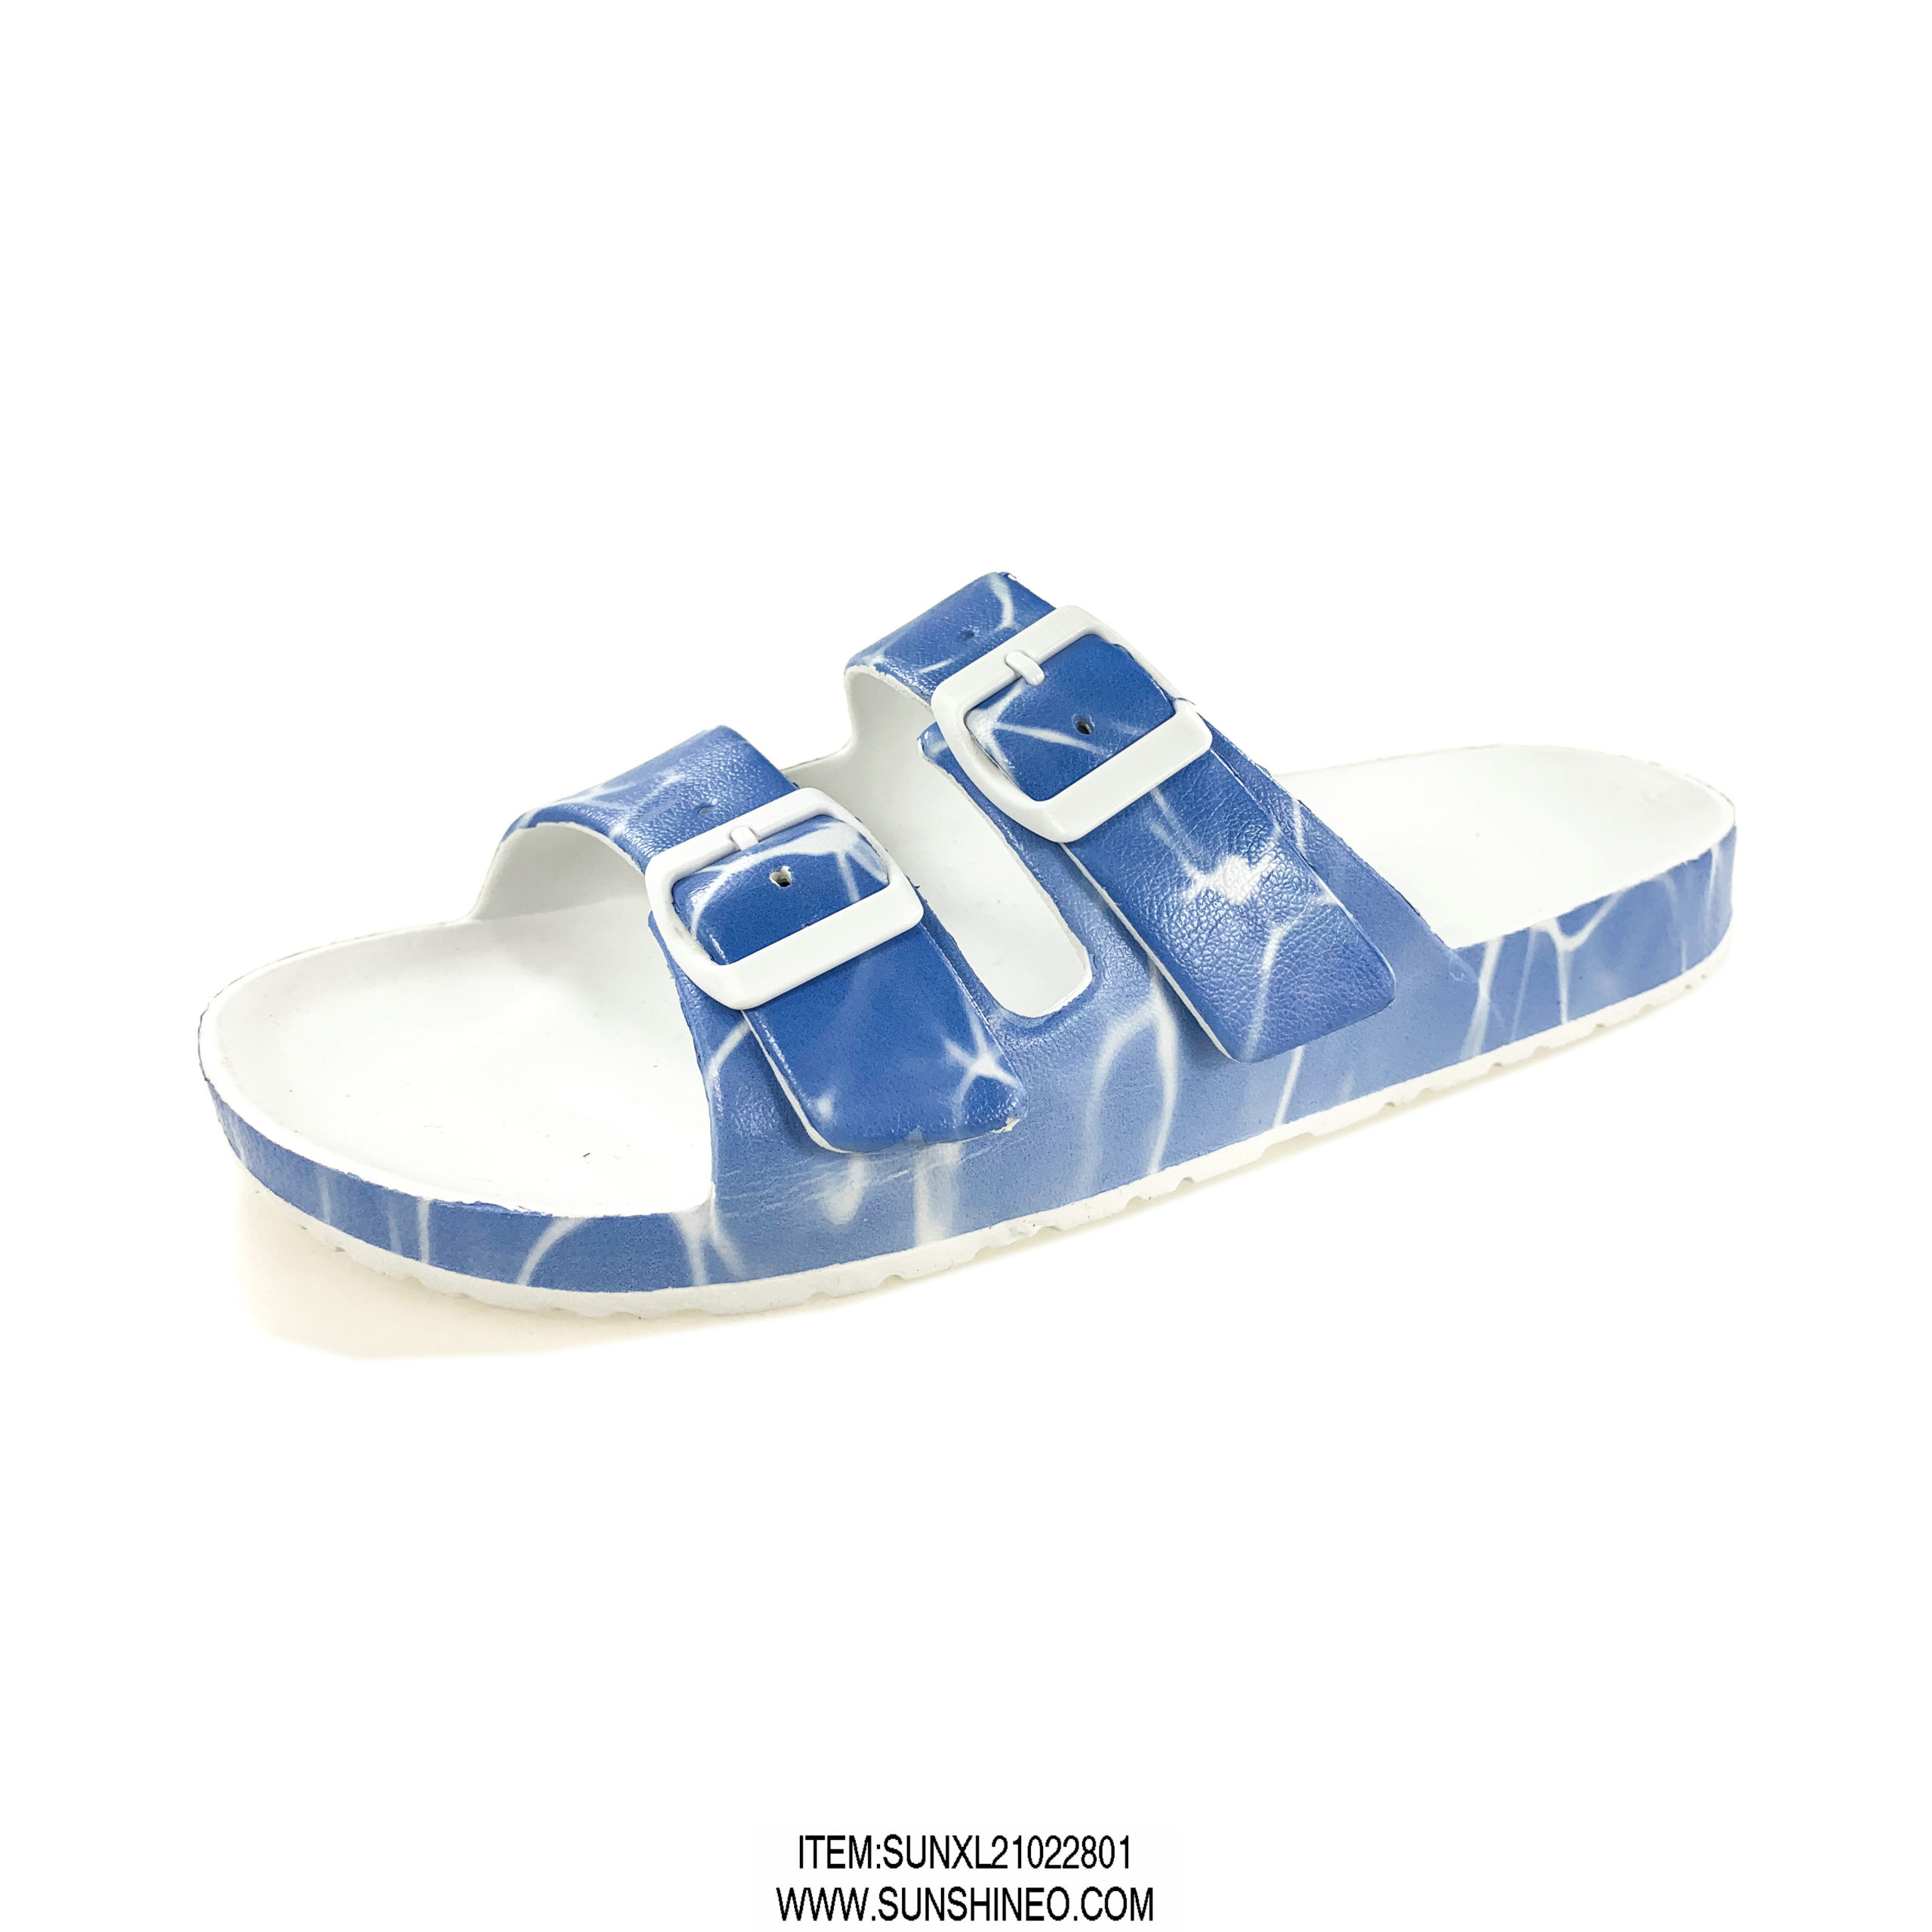 SUNXL21022801 printed Birken Sandal - Sunshineo shoe factory